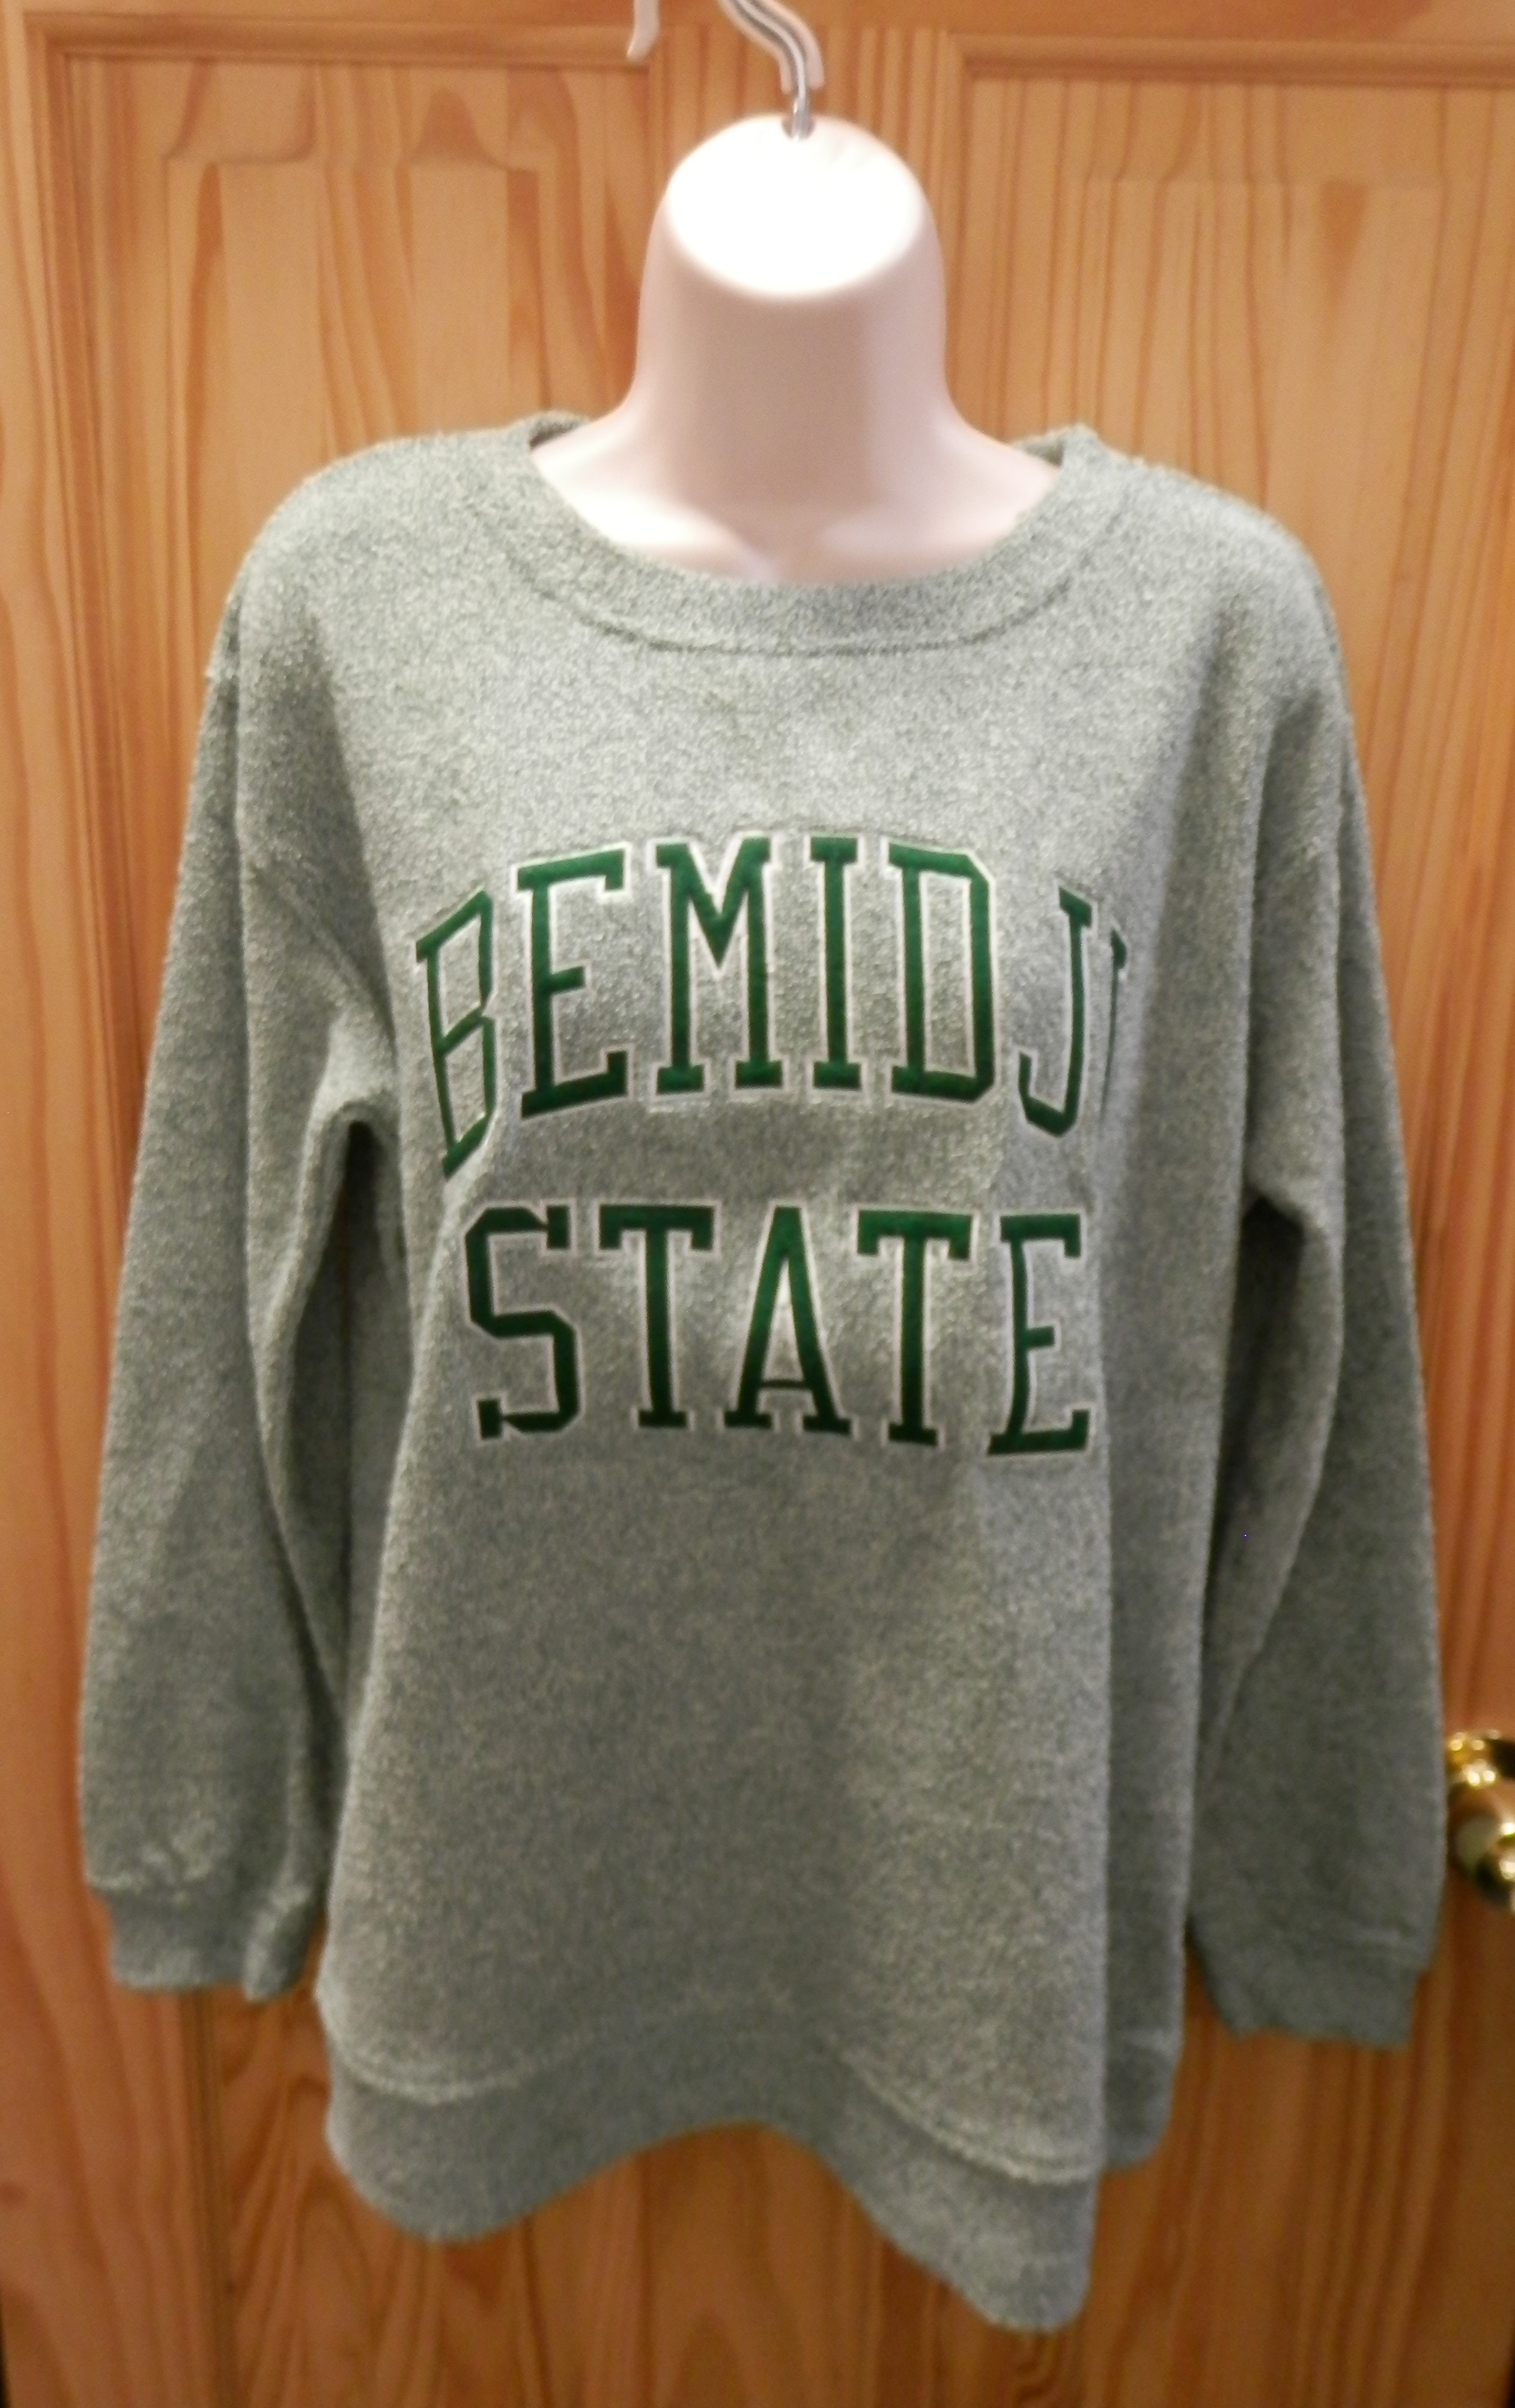 Ladies Bemidji State Cozy Pullover Sweatshirt